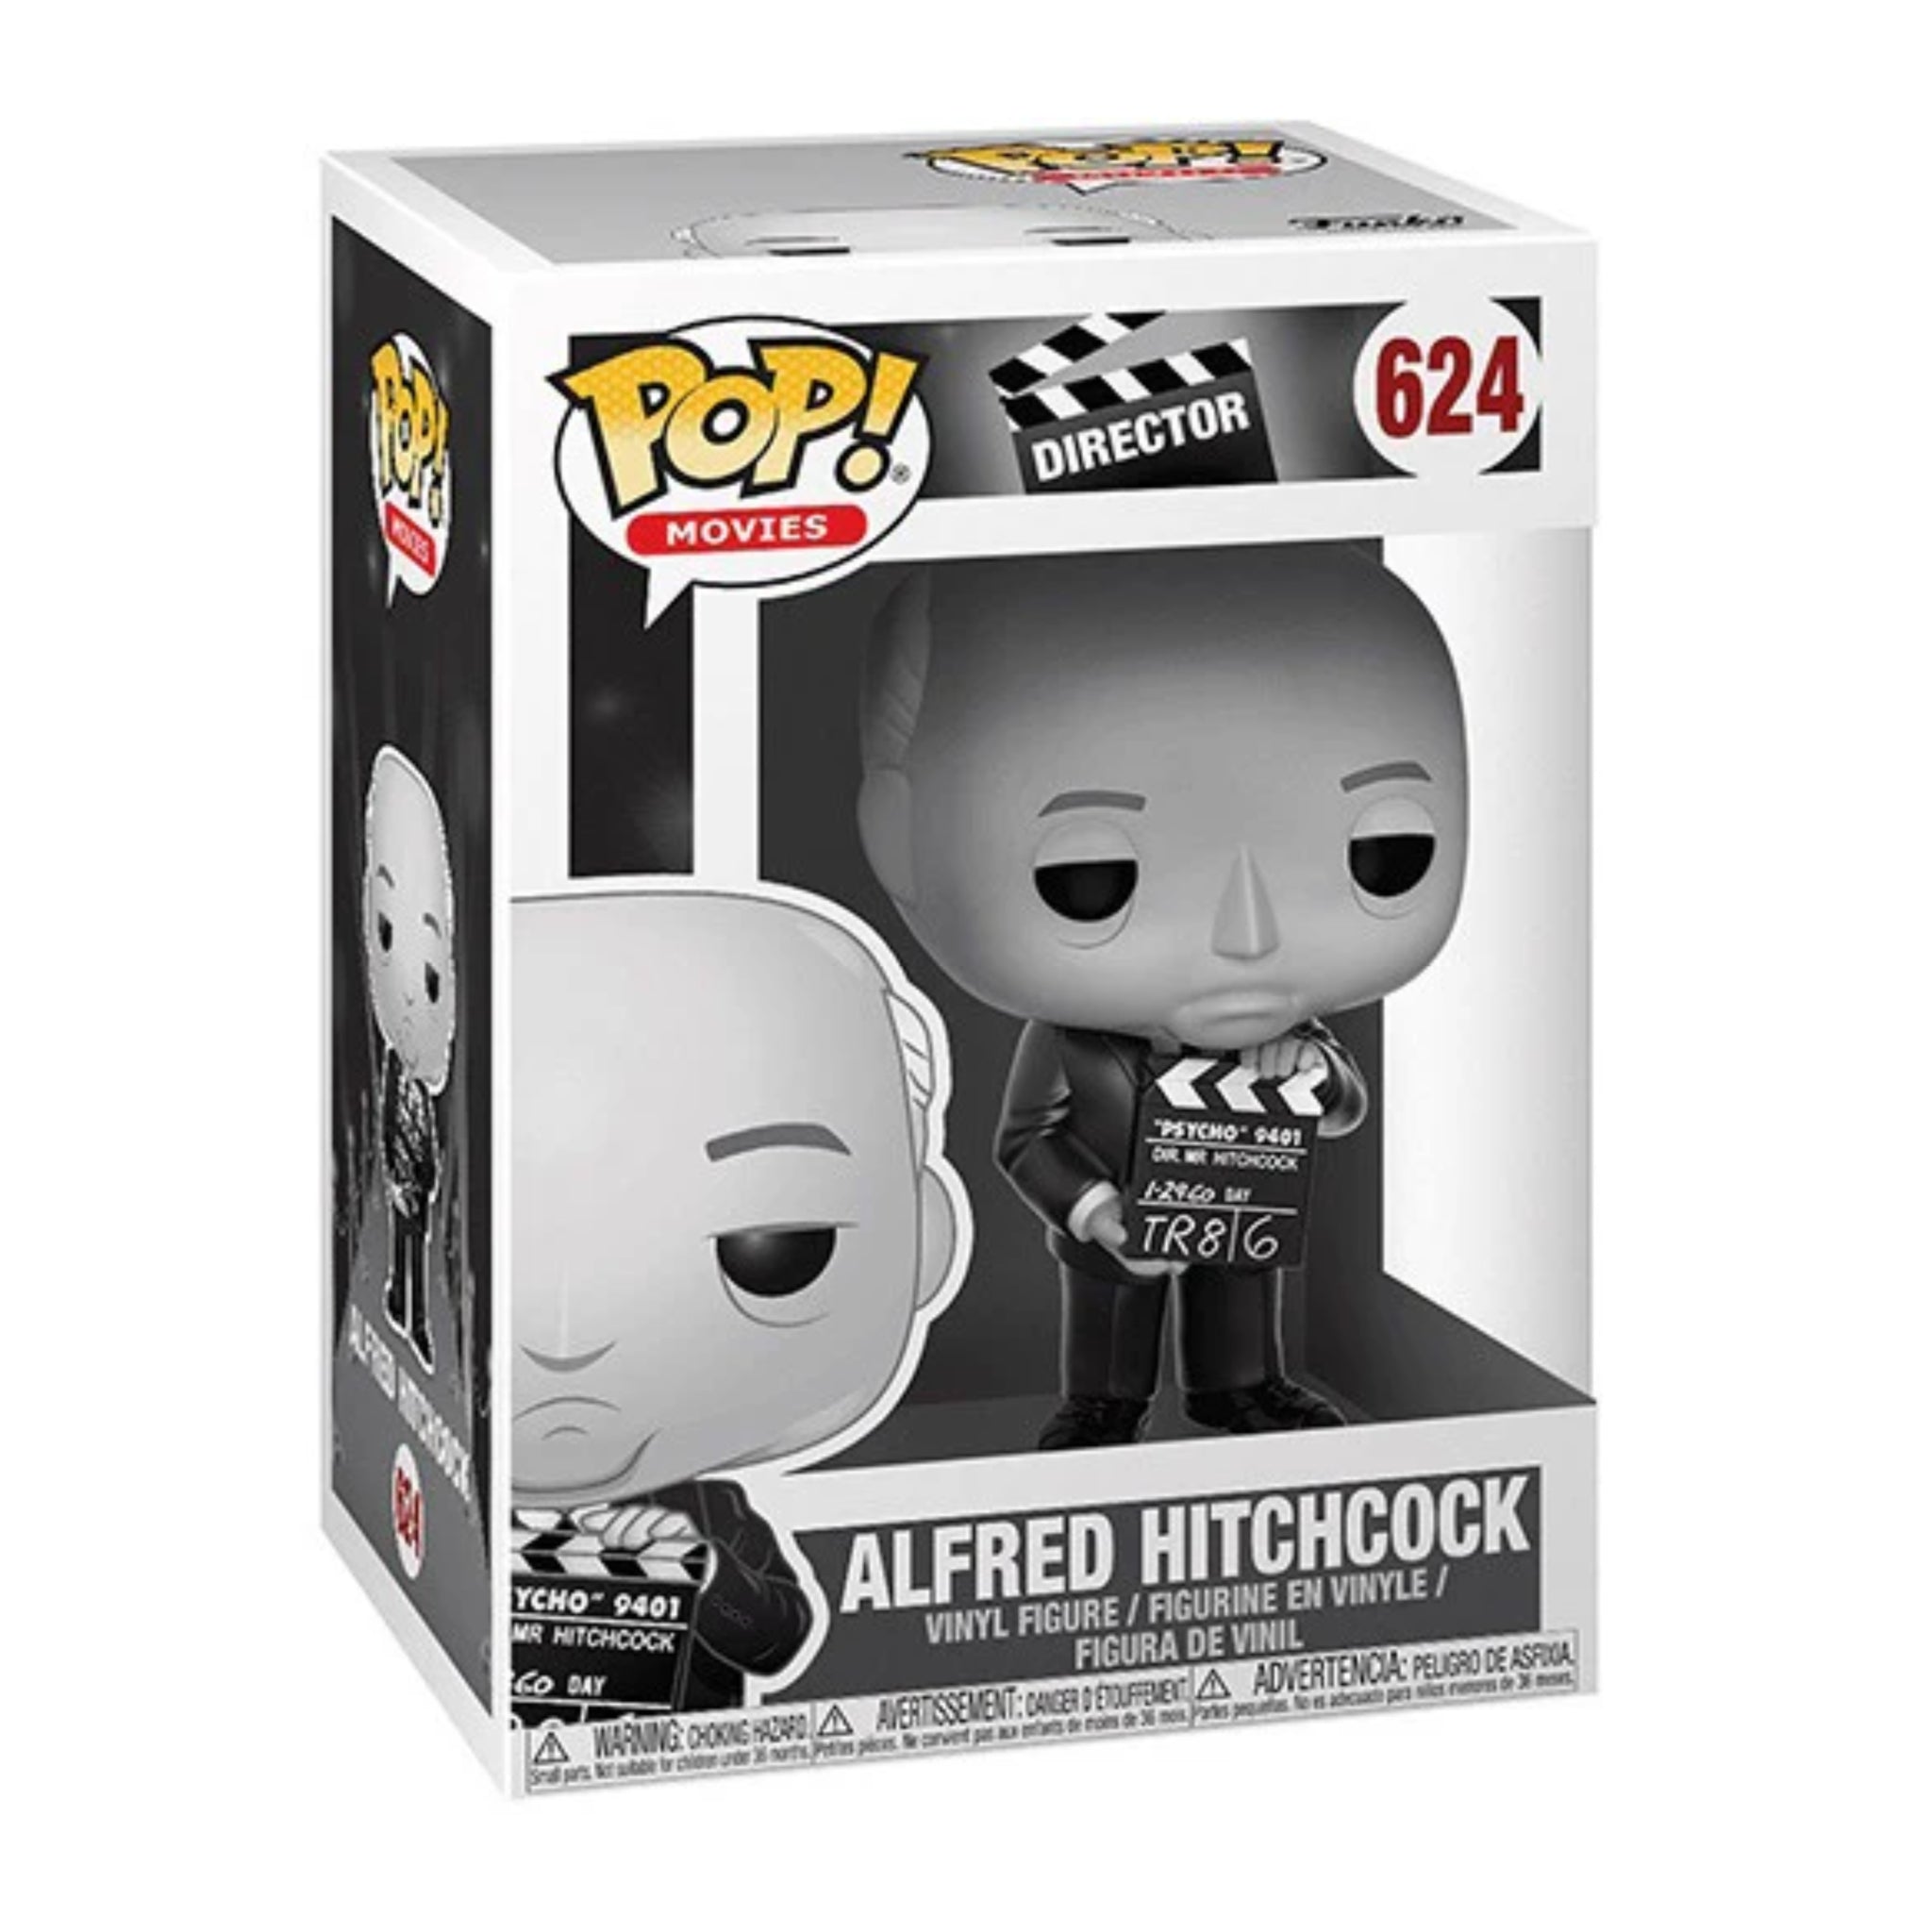 Alfred Hitchcock Funko Pop!